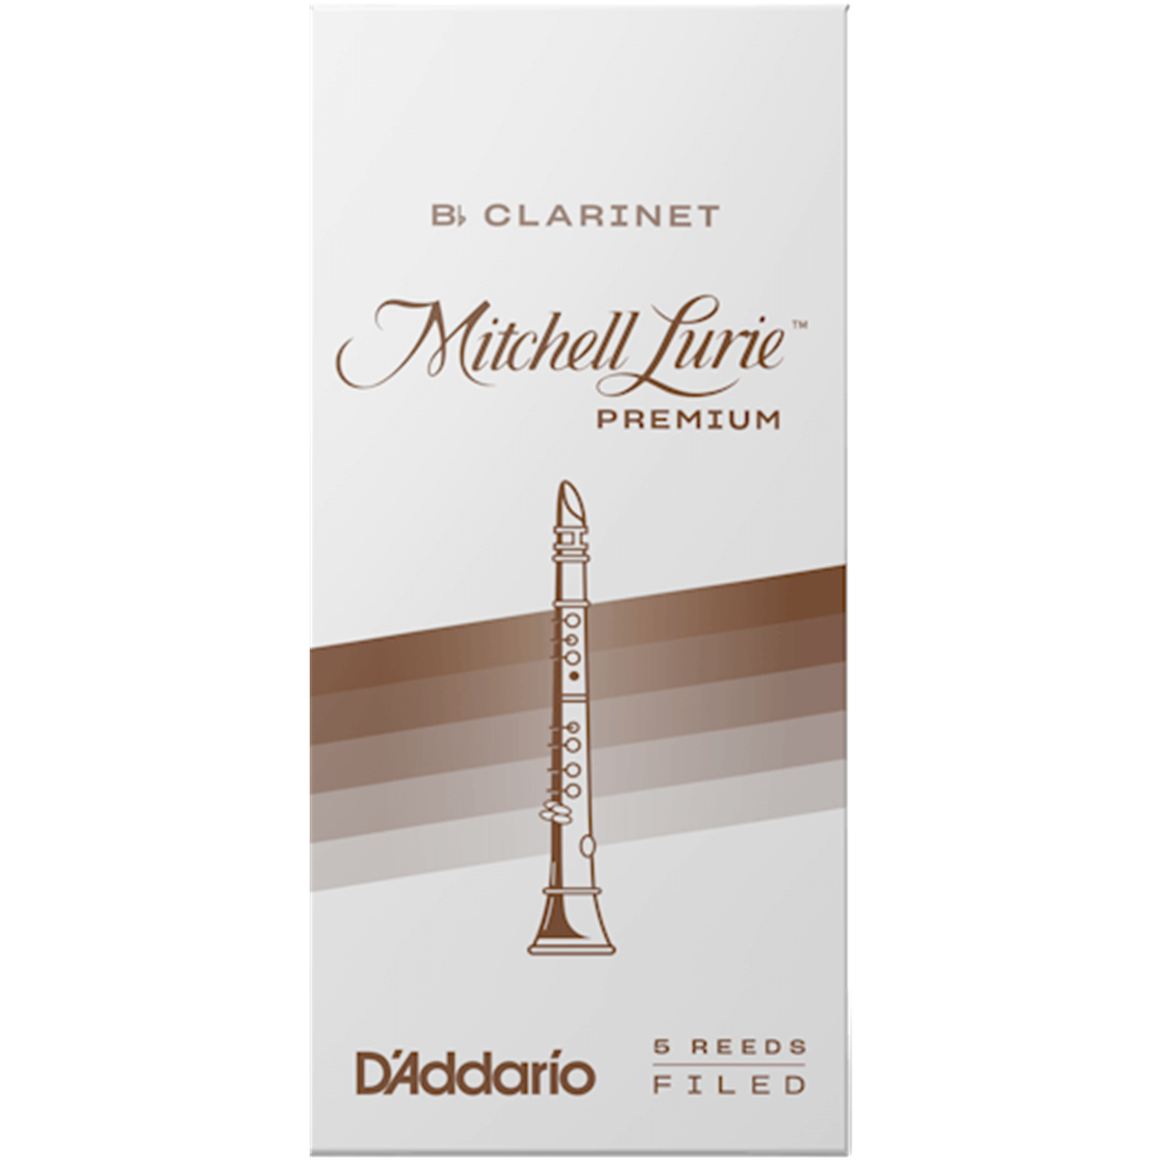 MITCHELL LURIE RMLP5BCL400 #4 Clarinet Premium Reeds, Box of 5